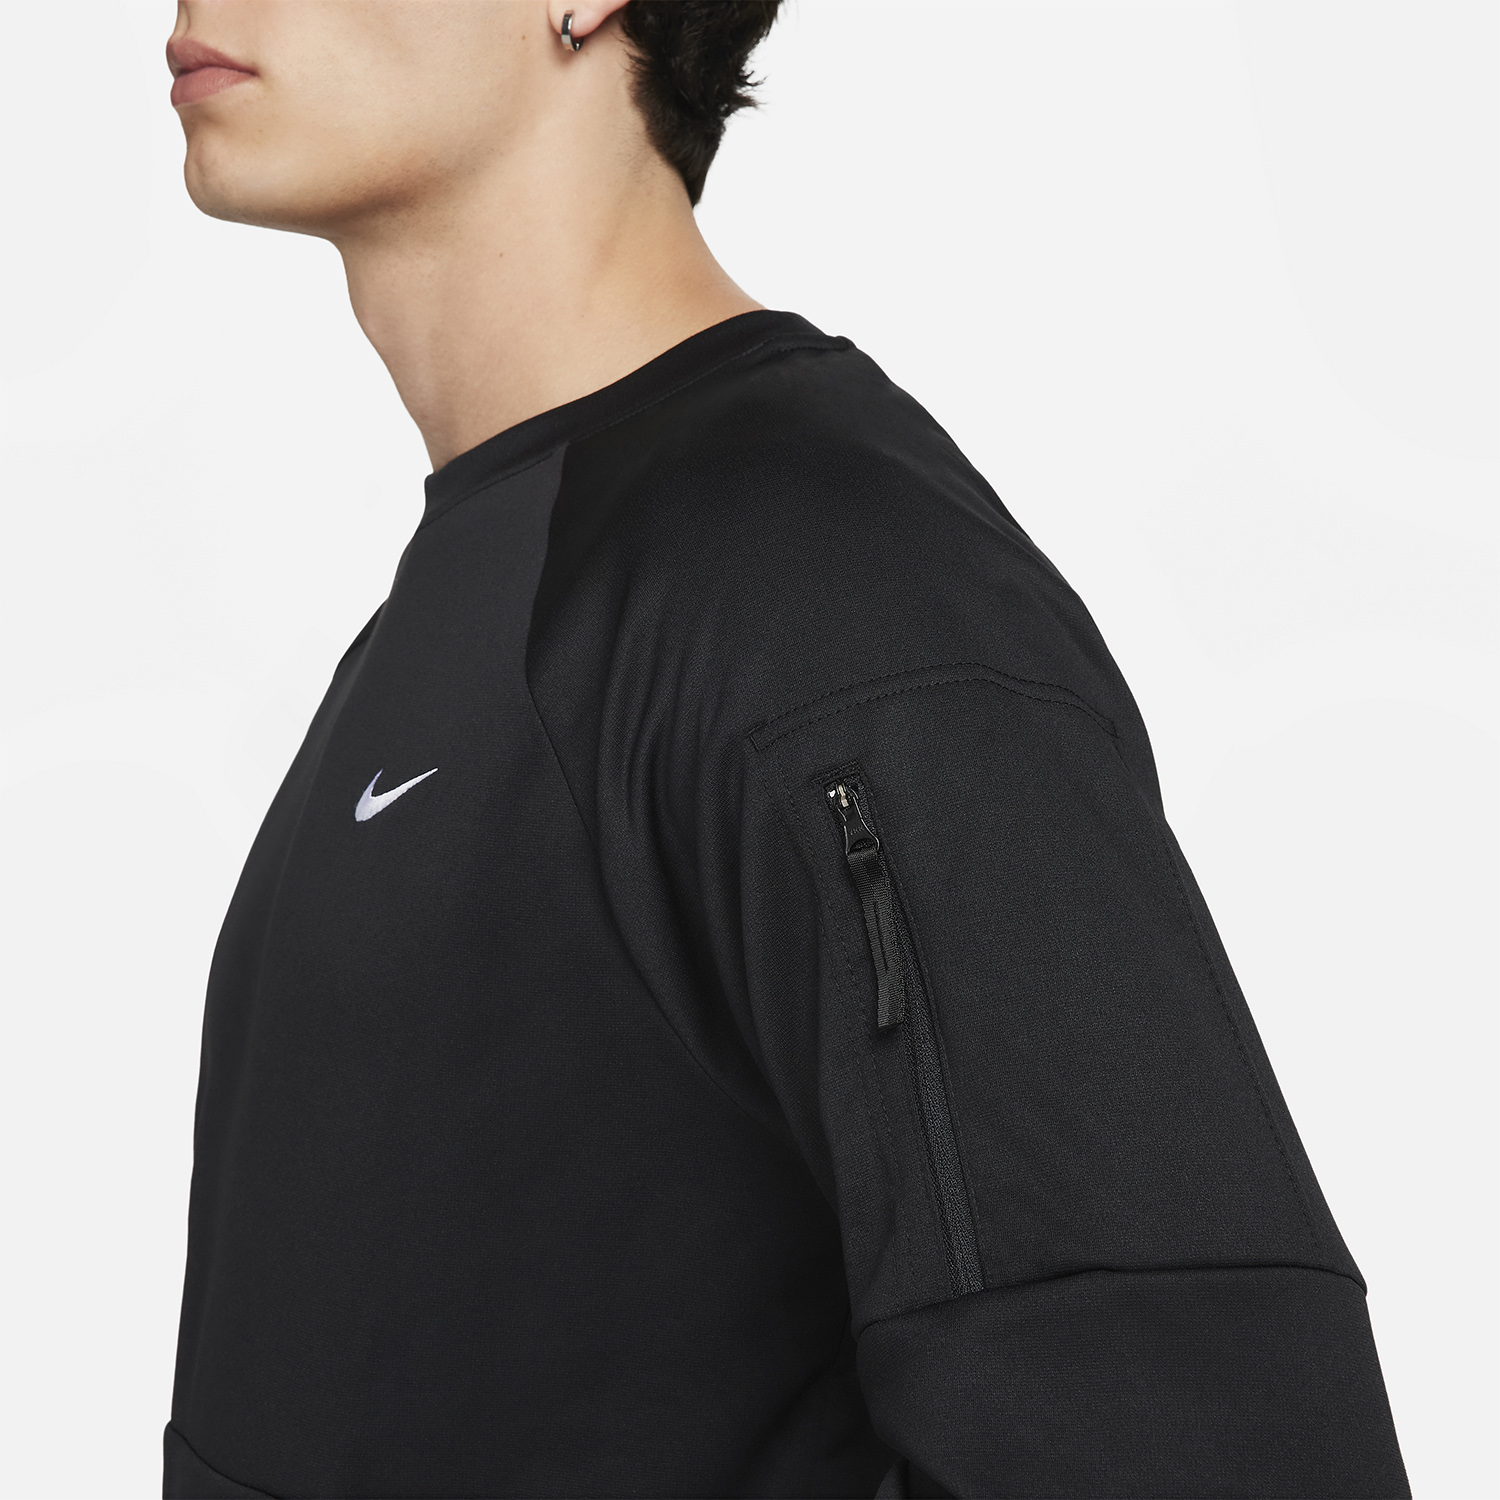 Nike Therma-FIT Crew Men's Training Shirt - Black/White